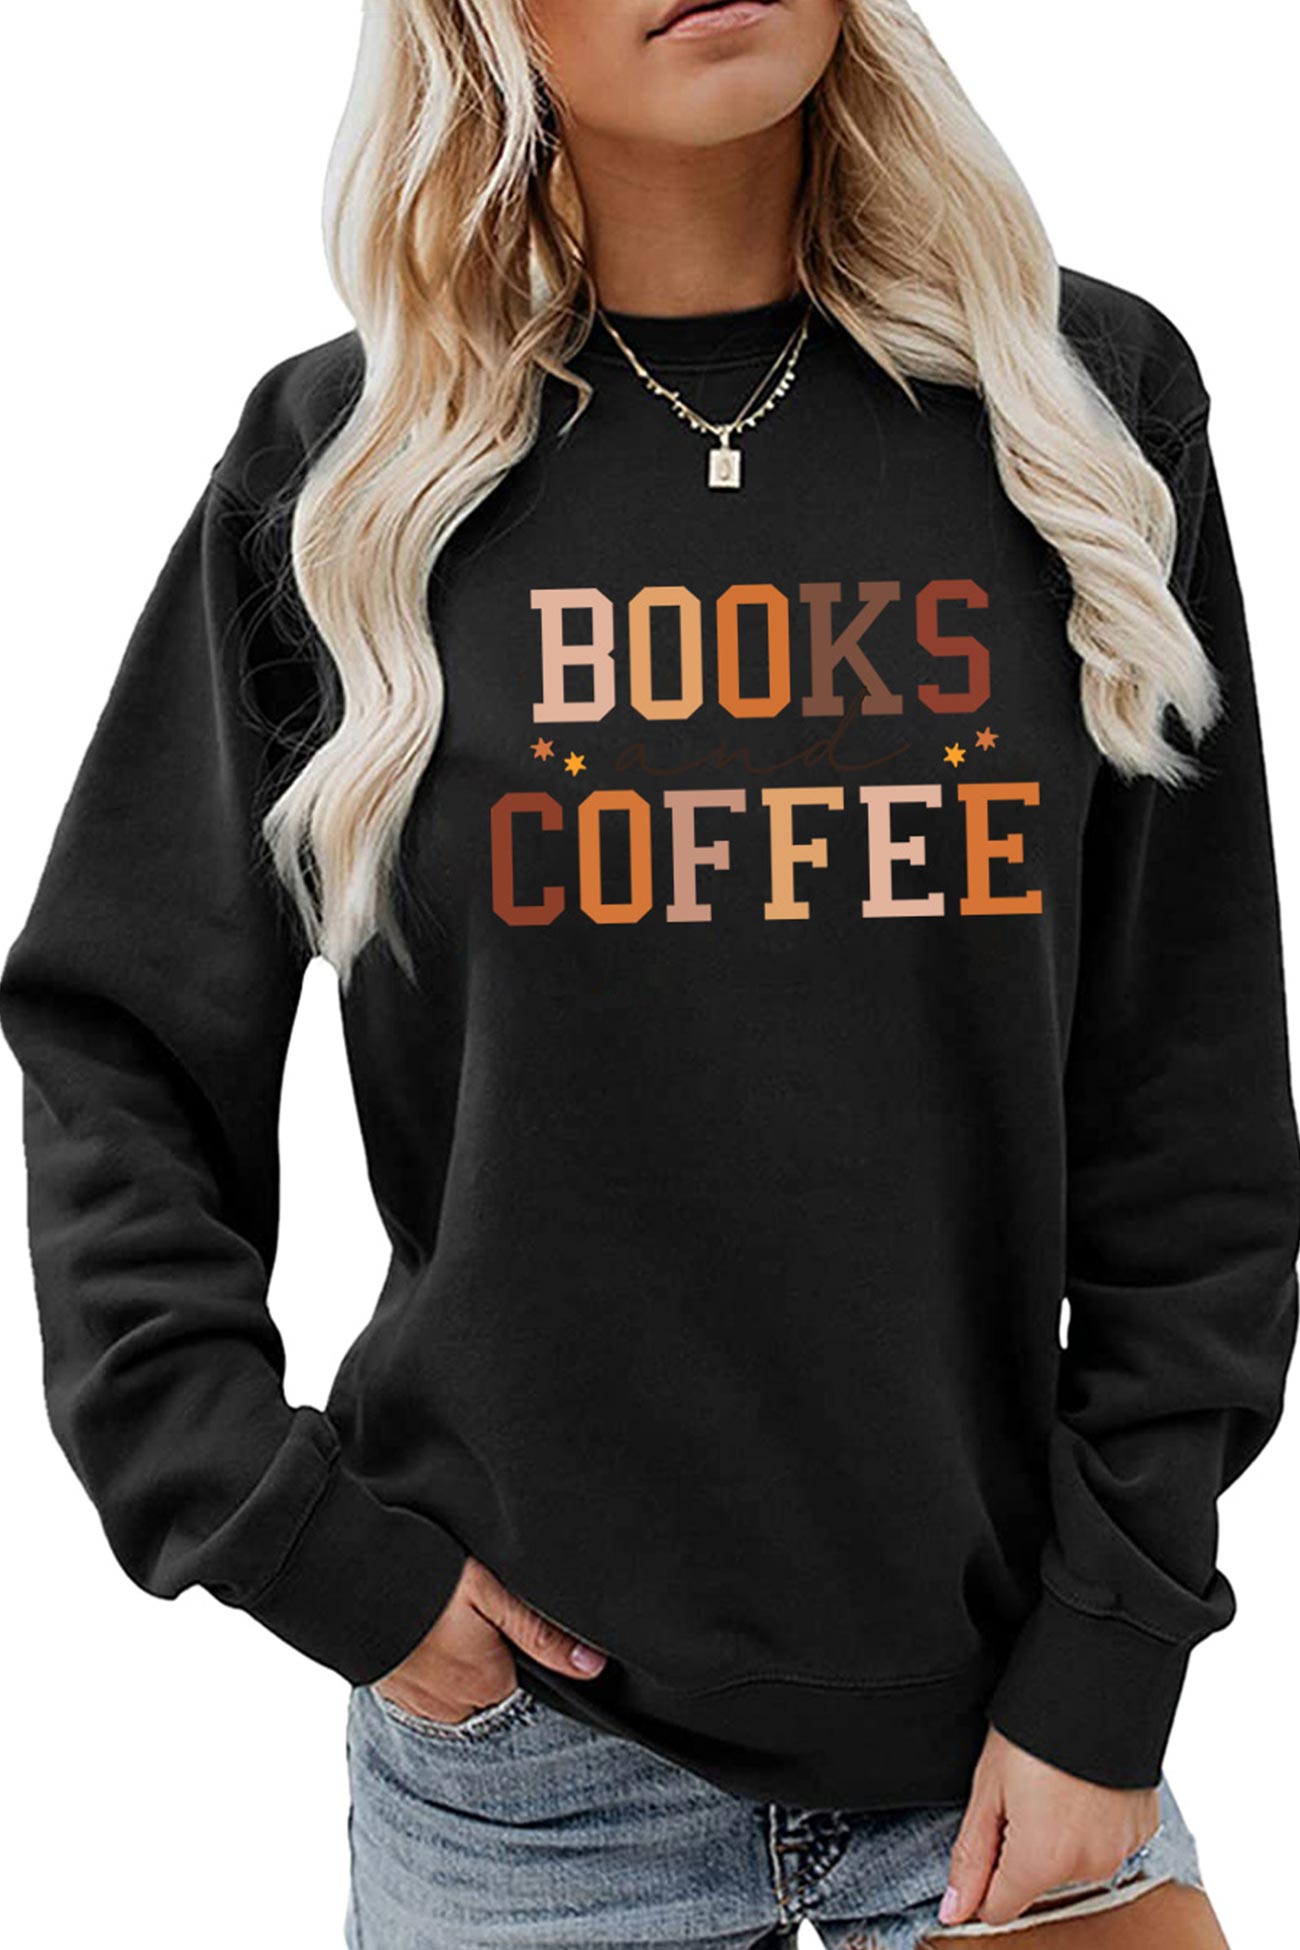 Books Coffee Letter Printed Sweatshirts